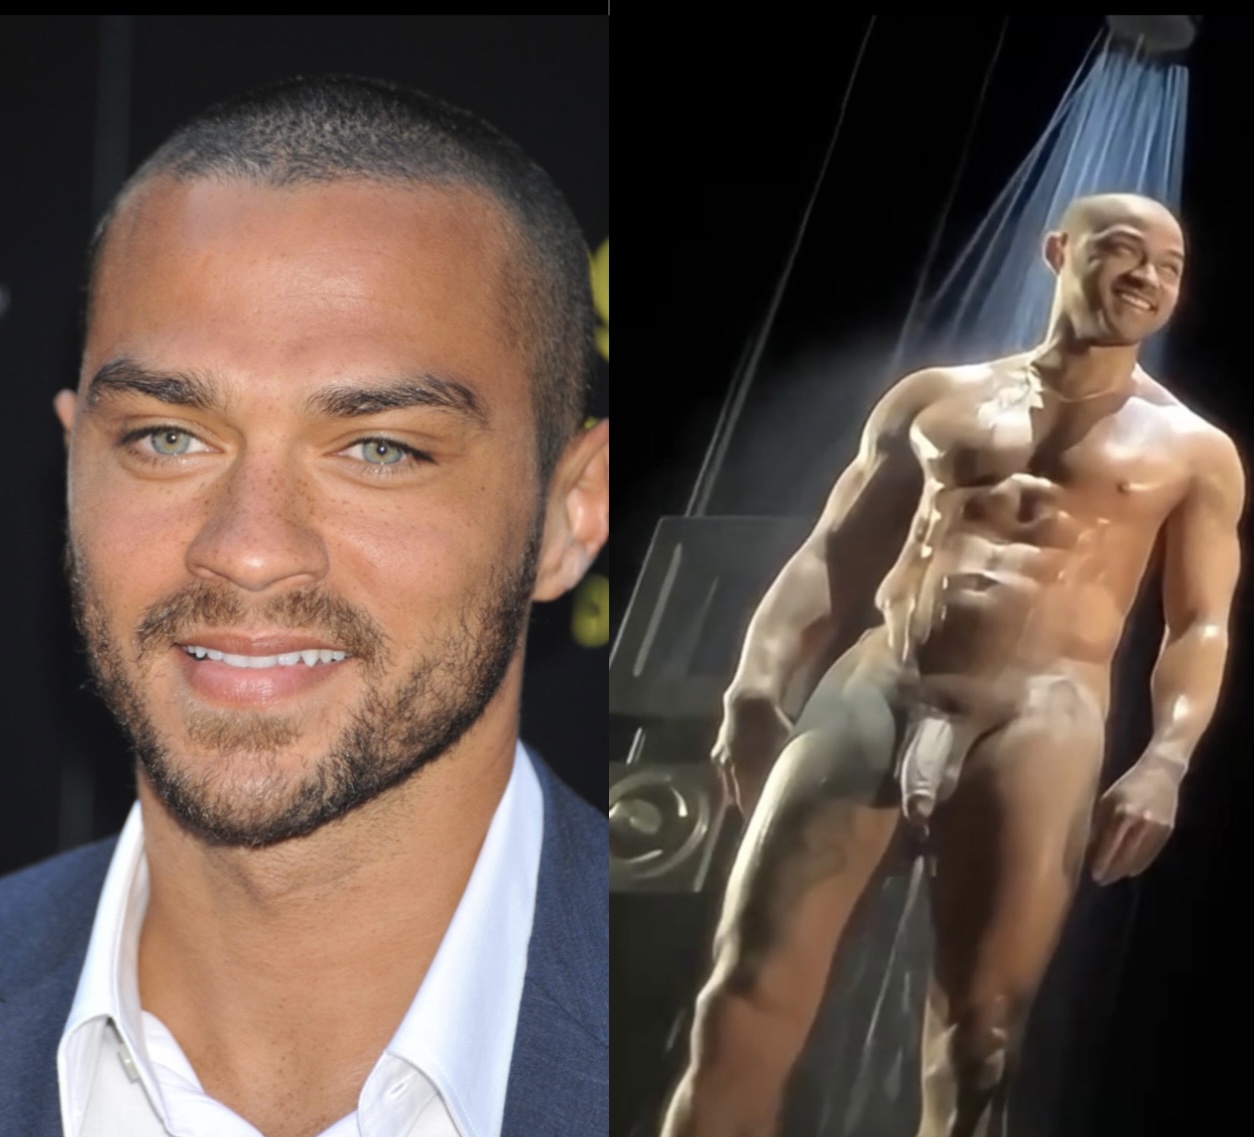 Hot horny sexzy naked men-loving male celebs